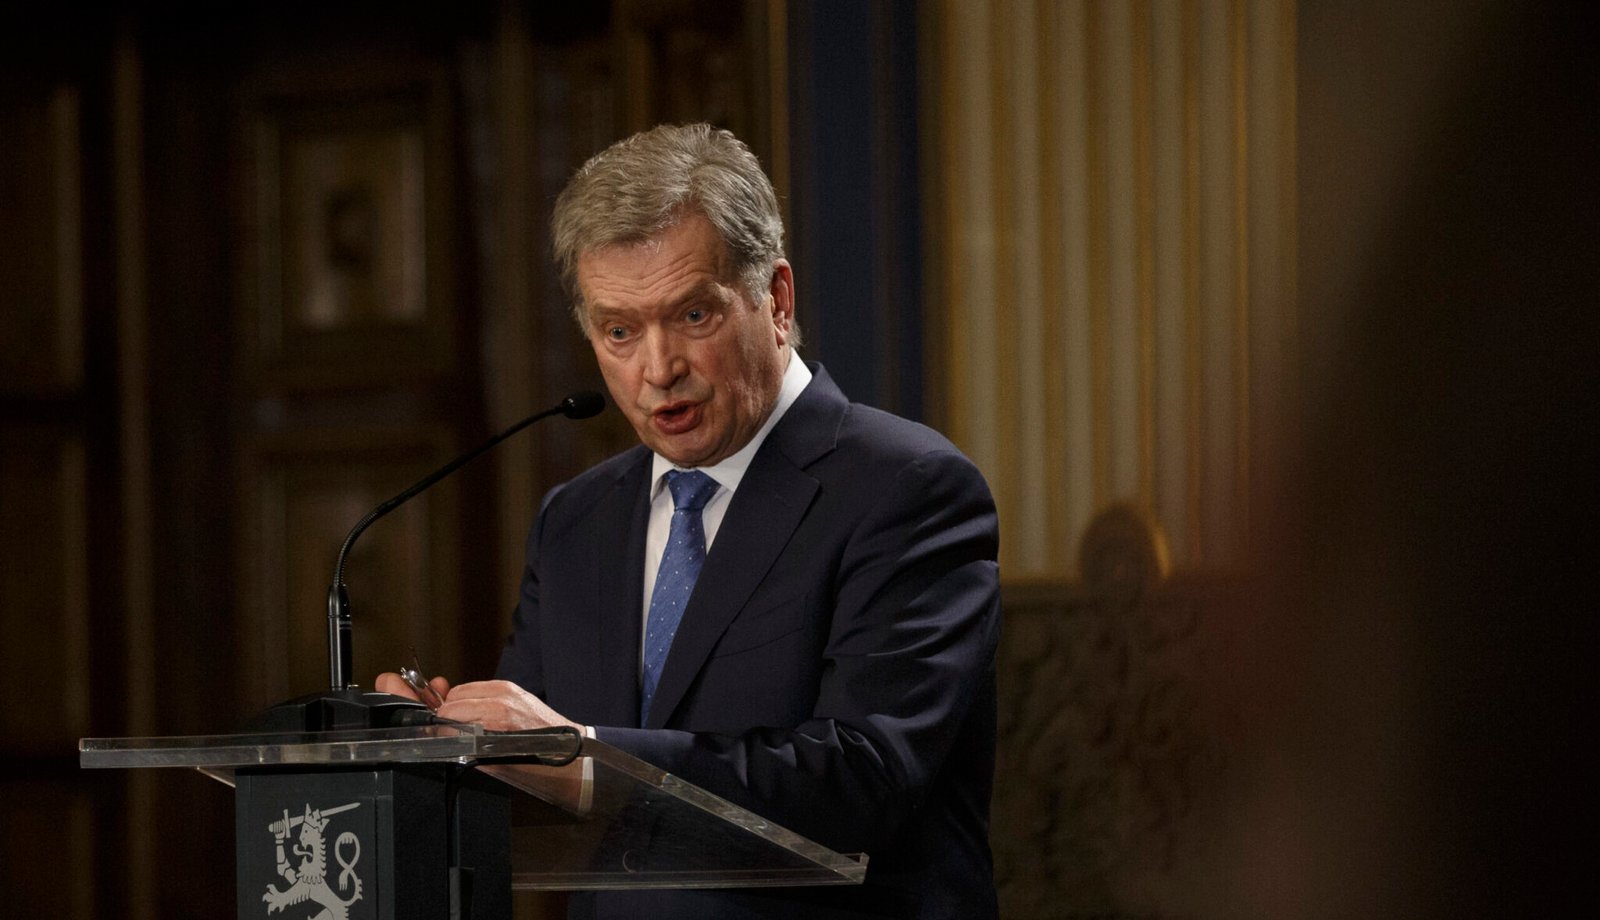 Finnish incumbent President Sauli Niinisto